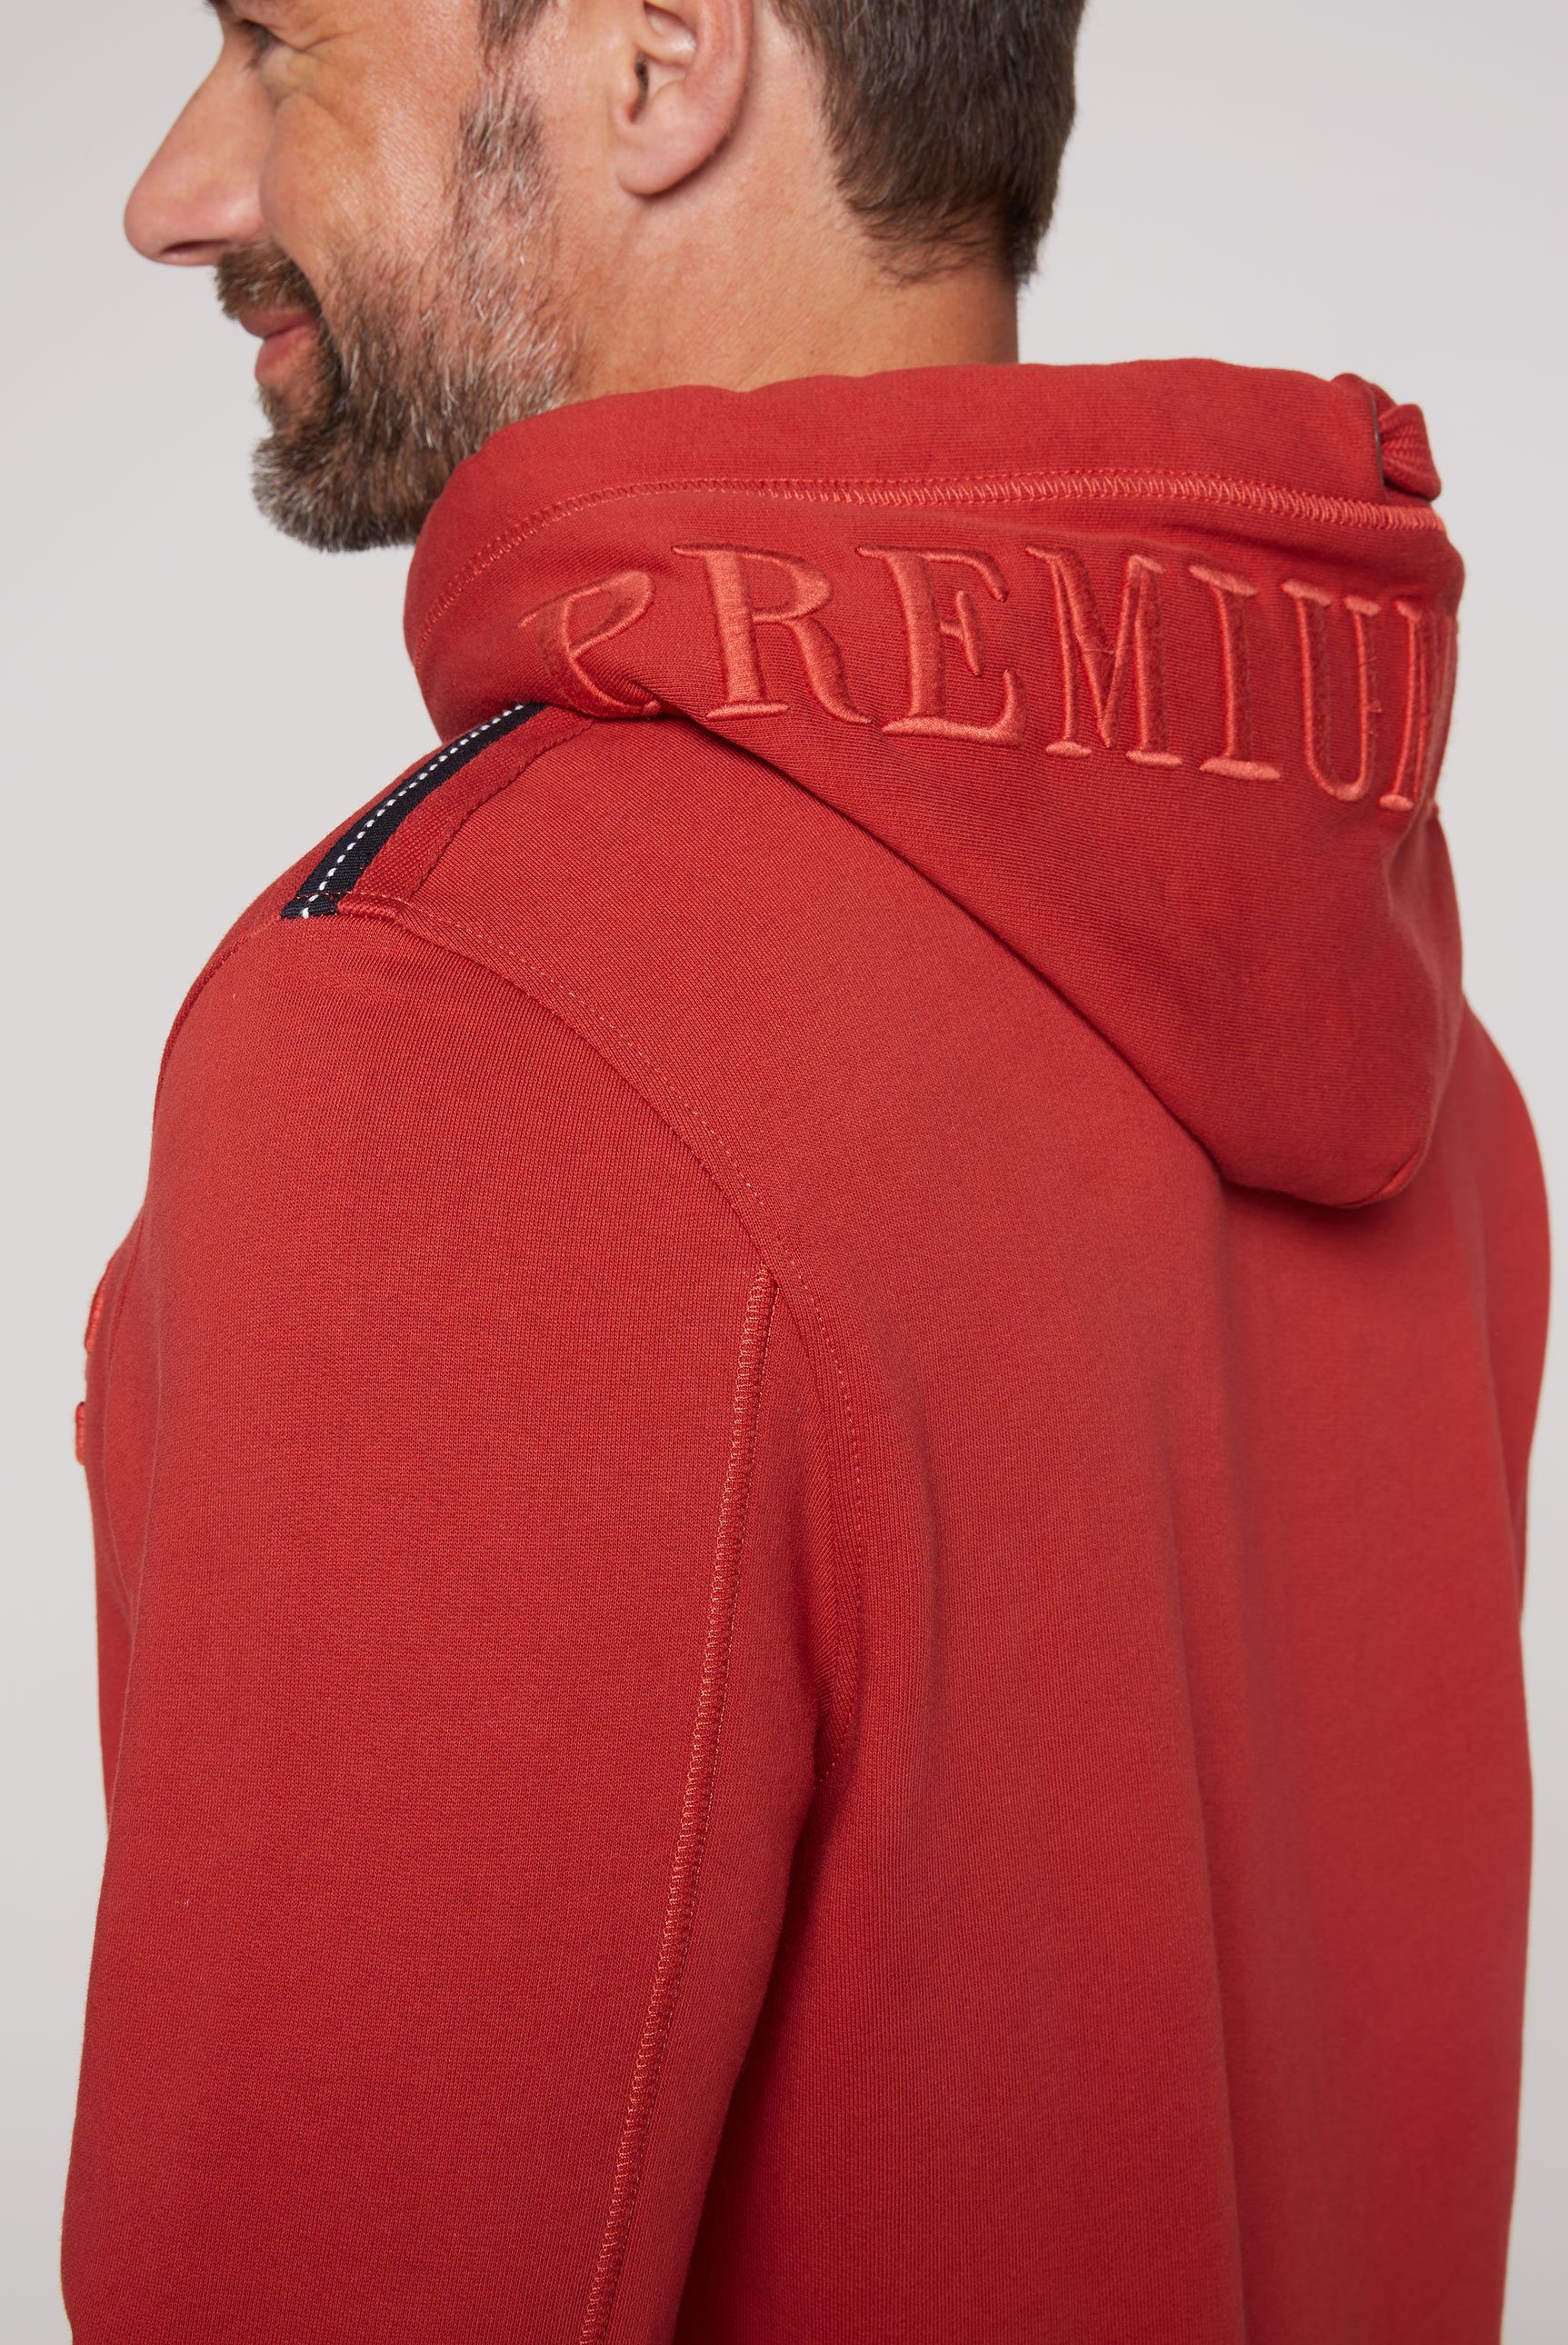 CAMP DAVID Logostickereien vintage mit red Kapuzensweatshirt